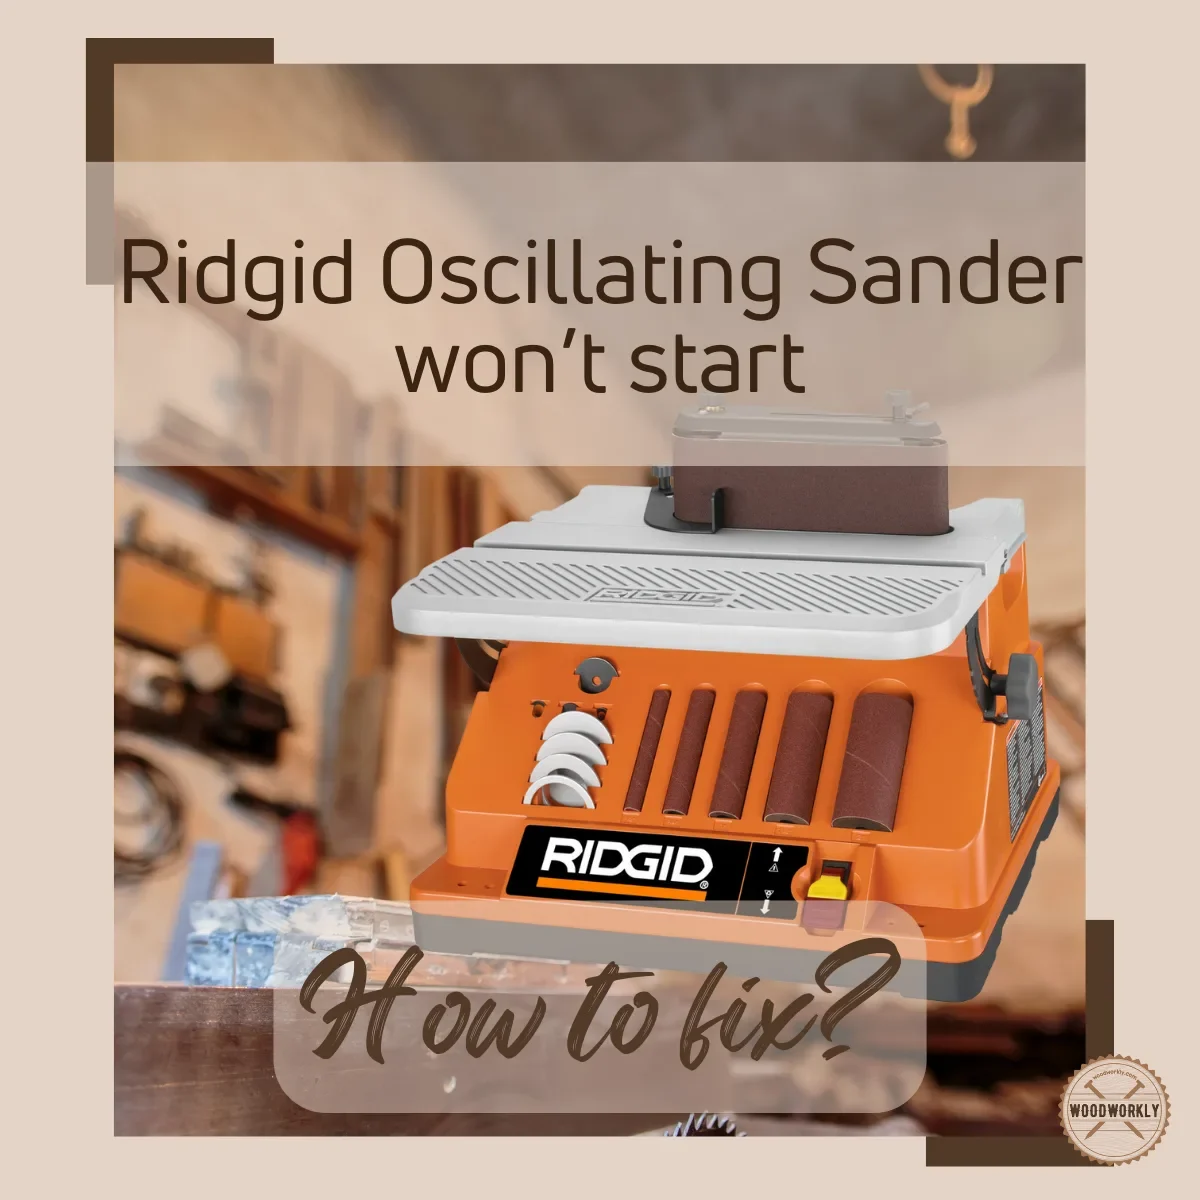 Ridgid Oscillating Sander won’t start